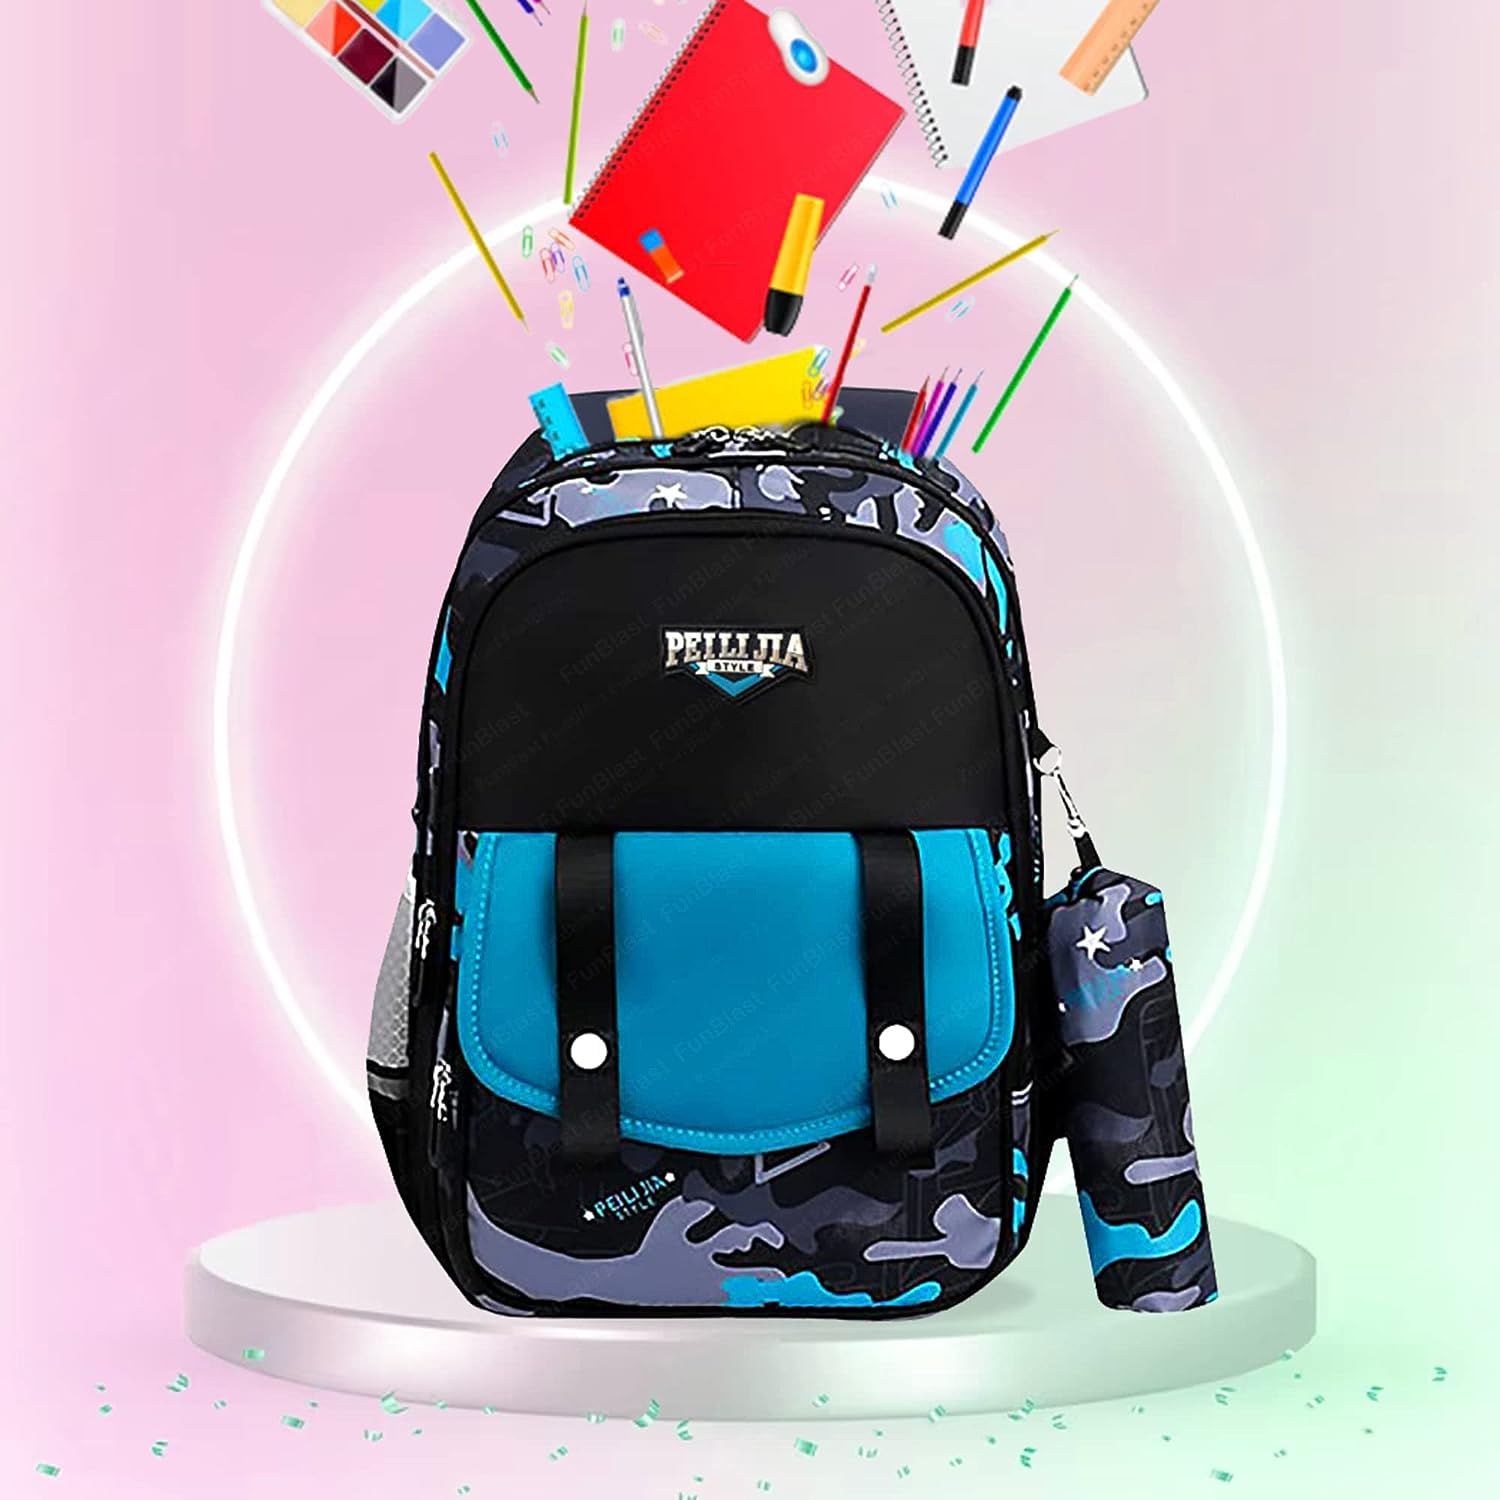 School Bags for Boys – College Bag, Casual Bag, School Bag, Backpack for Kids, Lightweight School Bags, Travel Bag, Picnic Bag (42 X 29 X 18 CM)